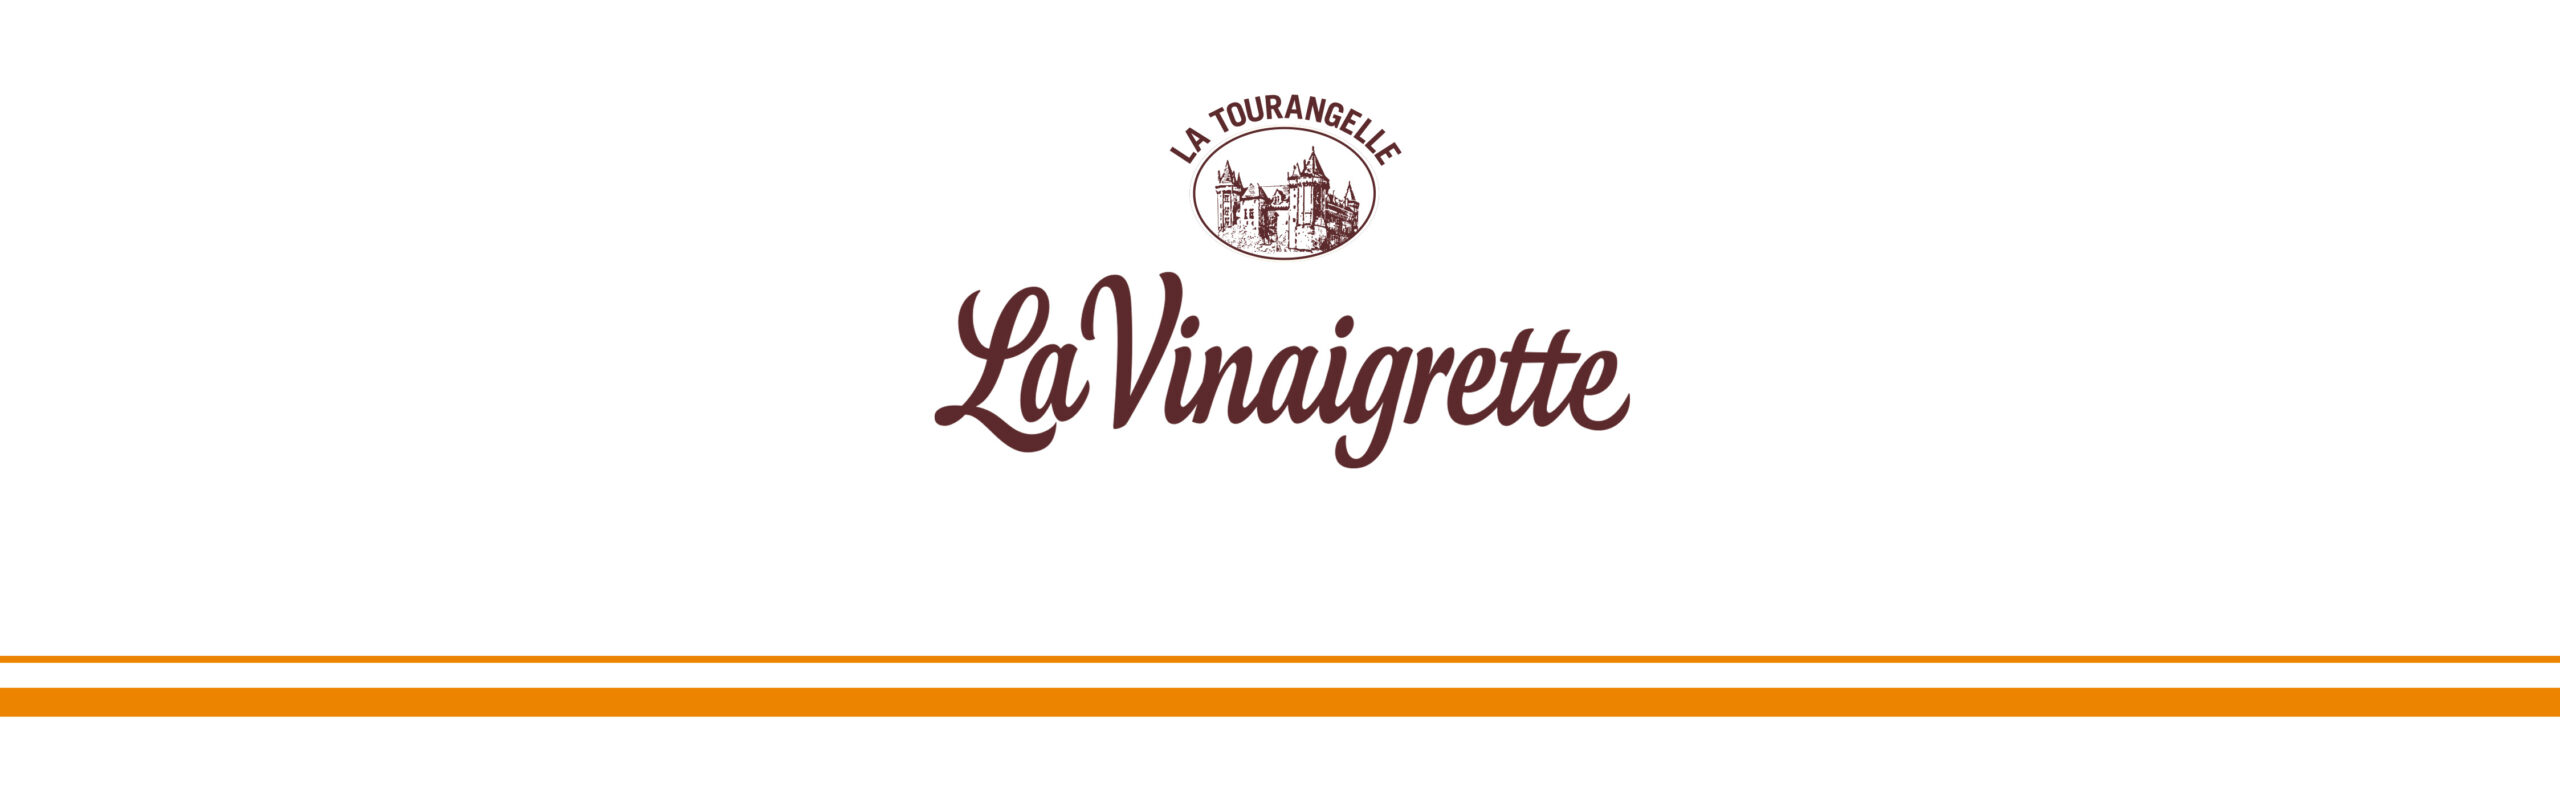 Vinaigrette logo la tourangelle VIKIU